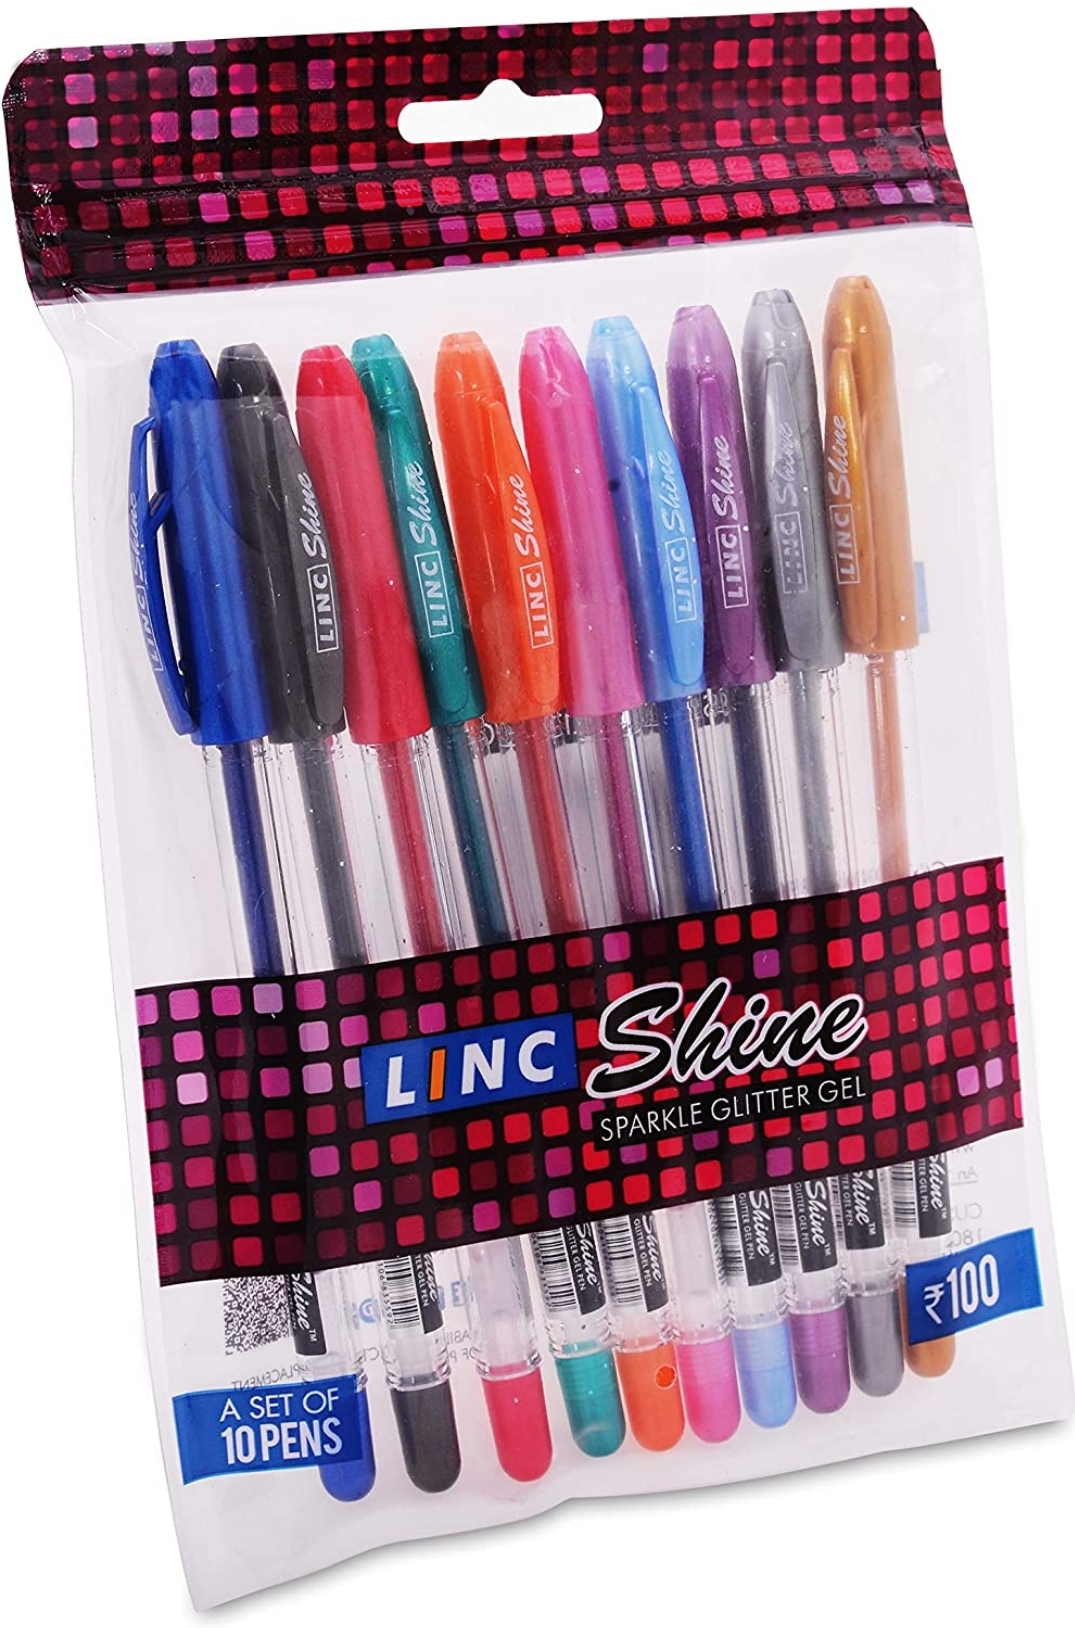 Linc Shine Sparkle Glitter Gel Pen, Multi Colour Pack of 10